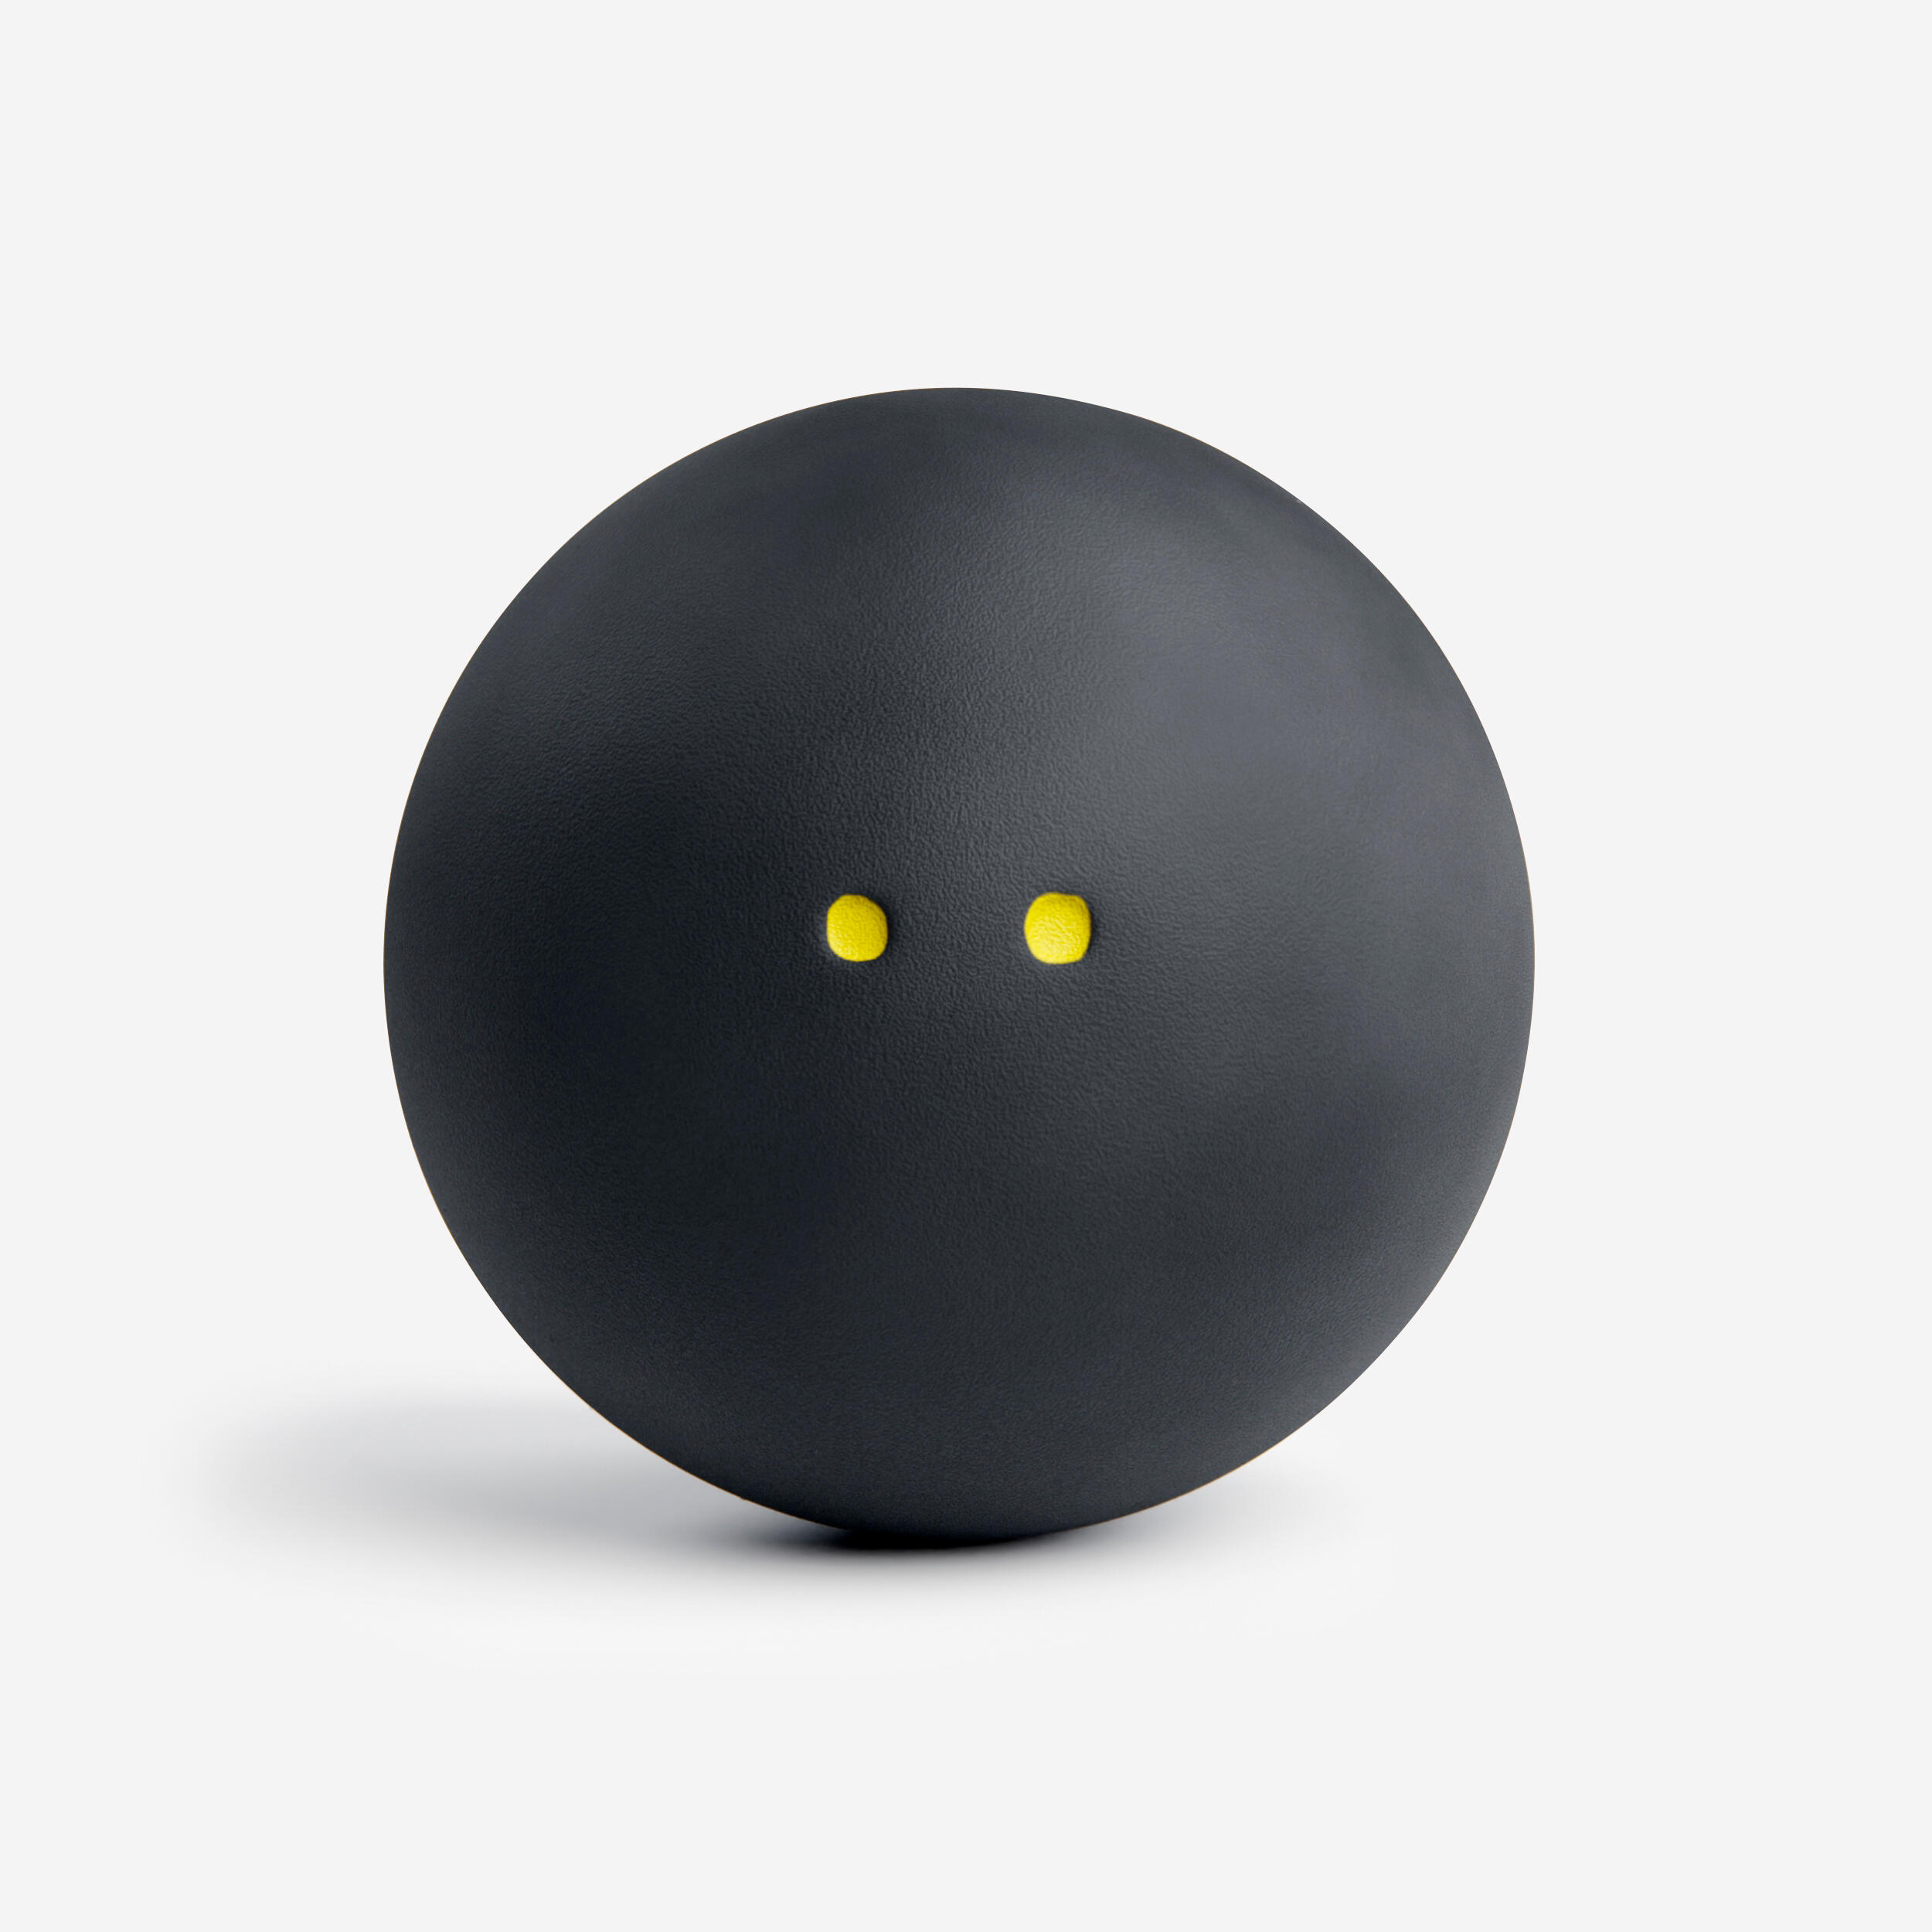 Double Yellow Dot Squash Ball SB 990 1/4